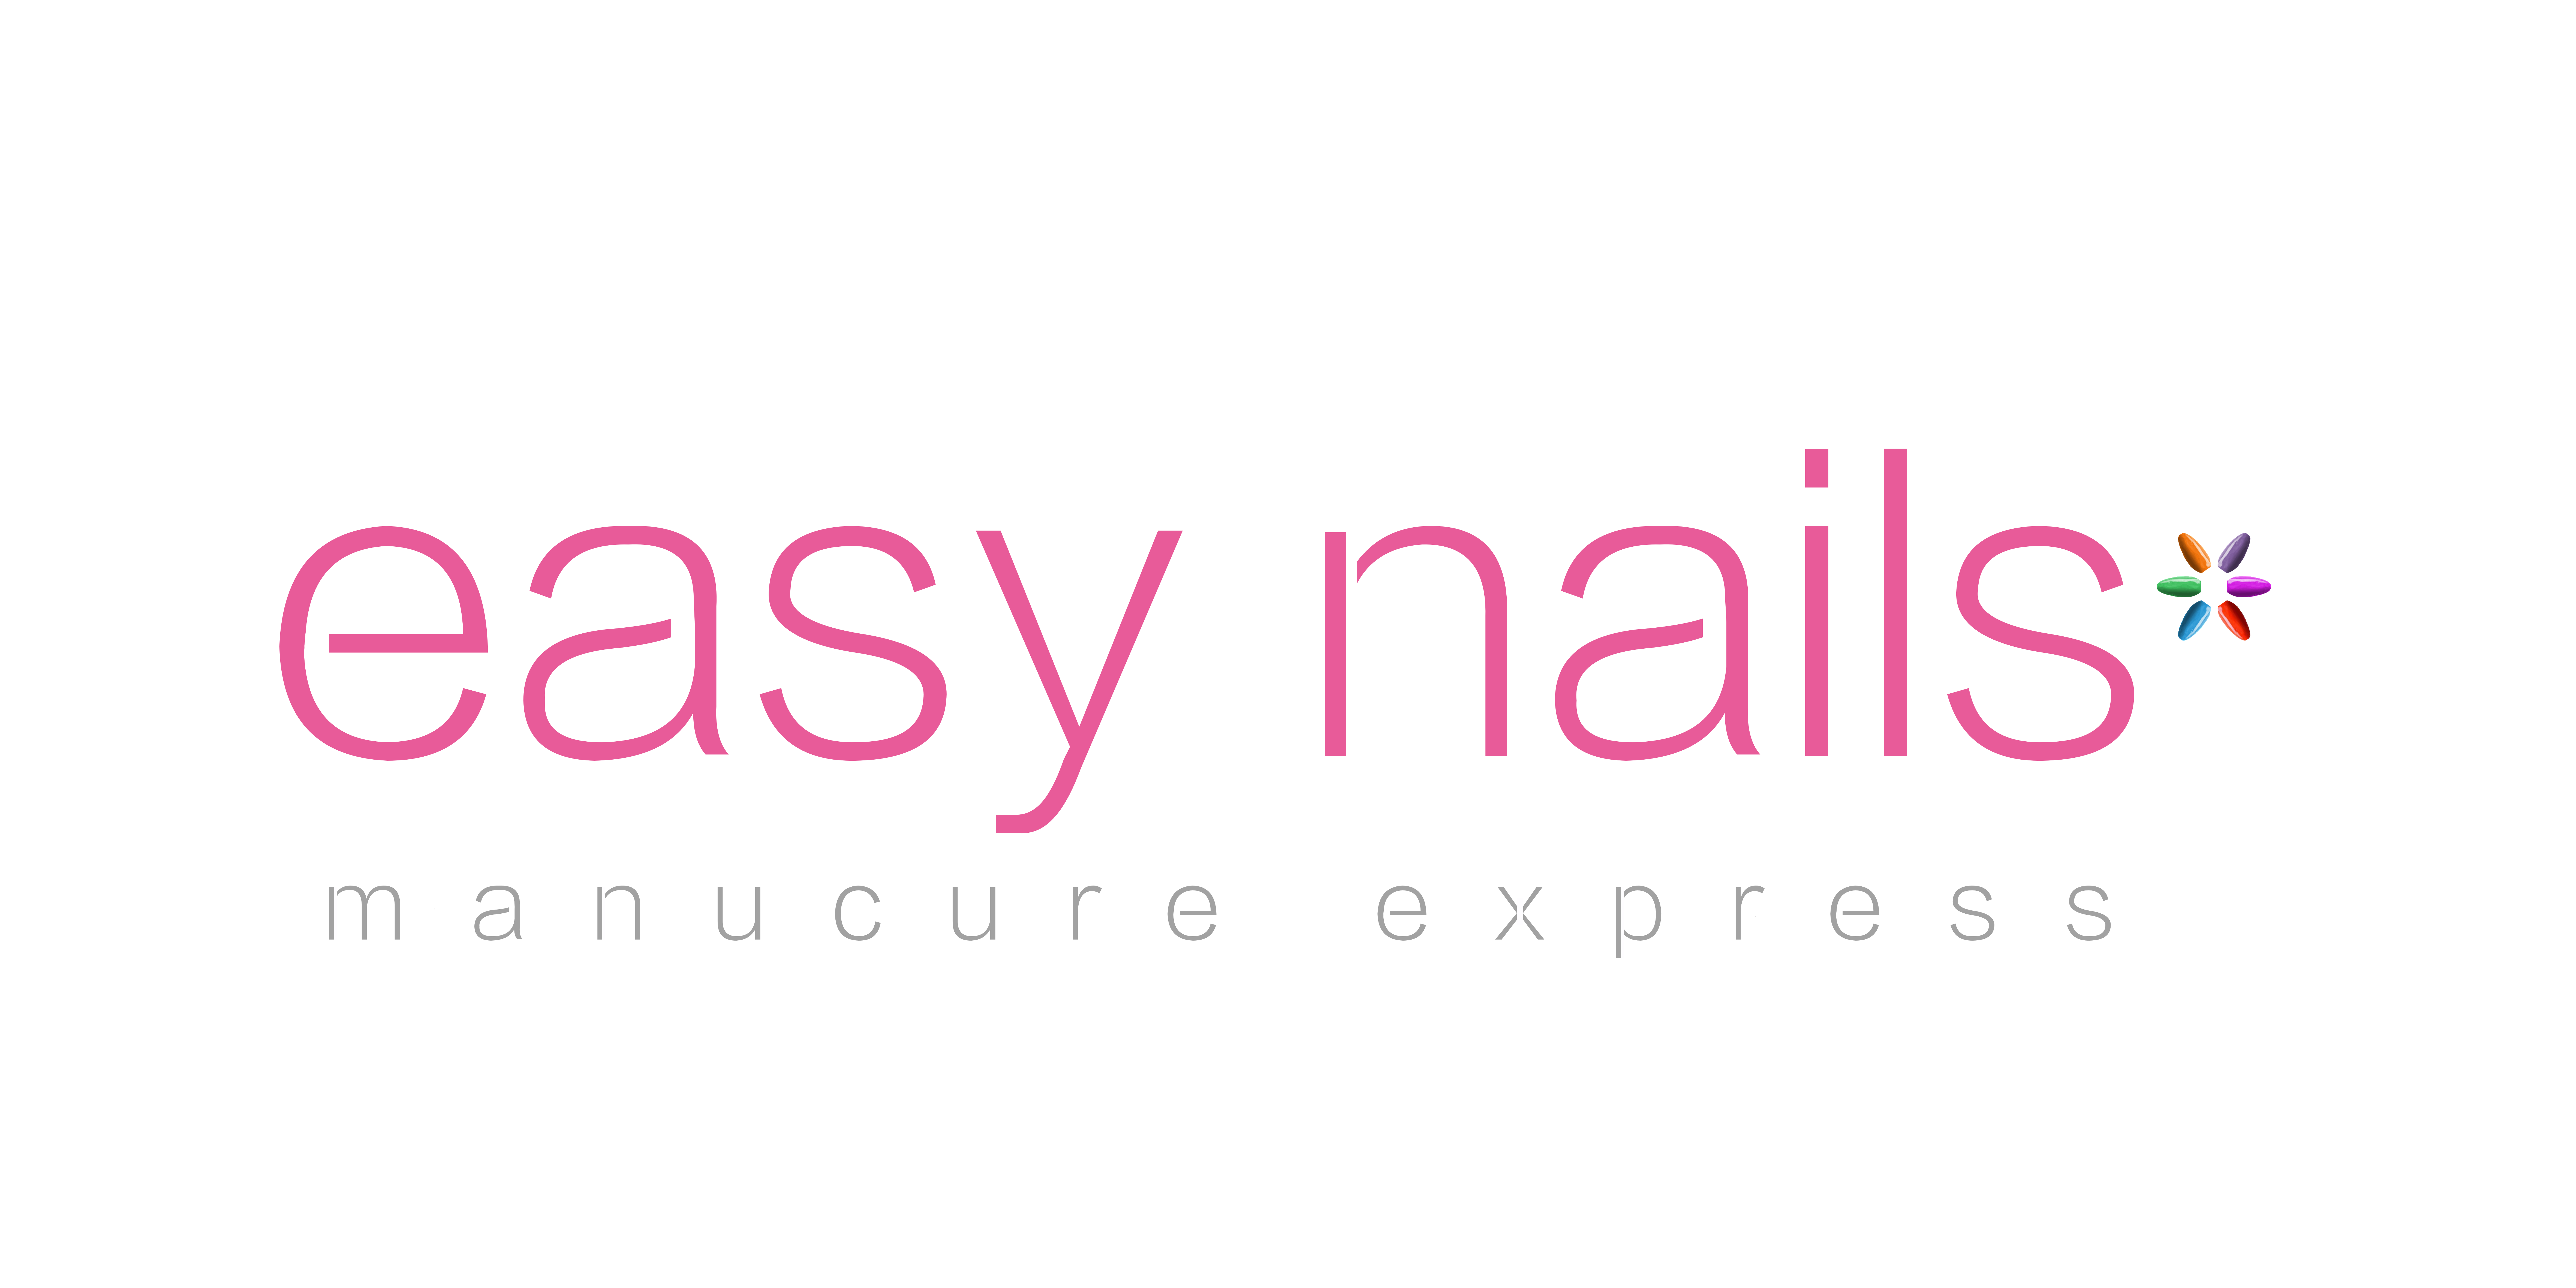 Easynails Manucure Express